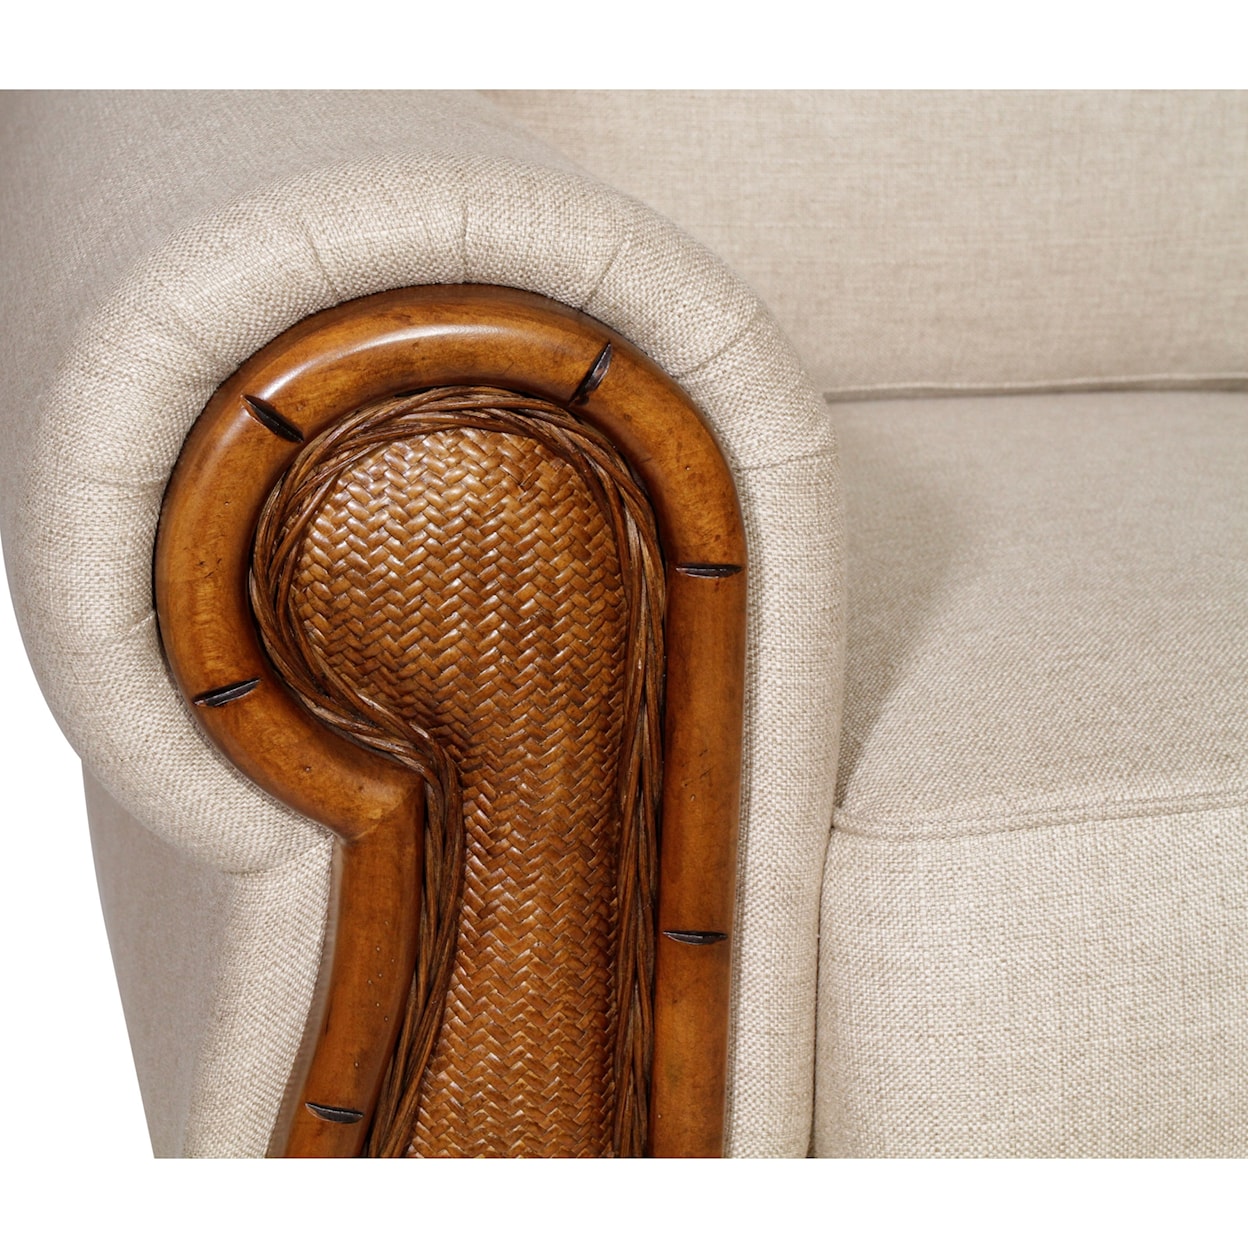 Sarah Randolph Designs 1374 Sofa with Woven Rattan Detail